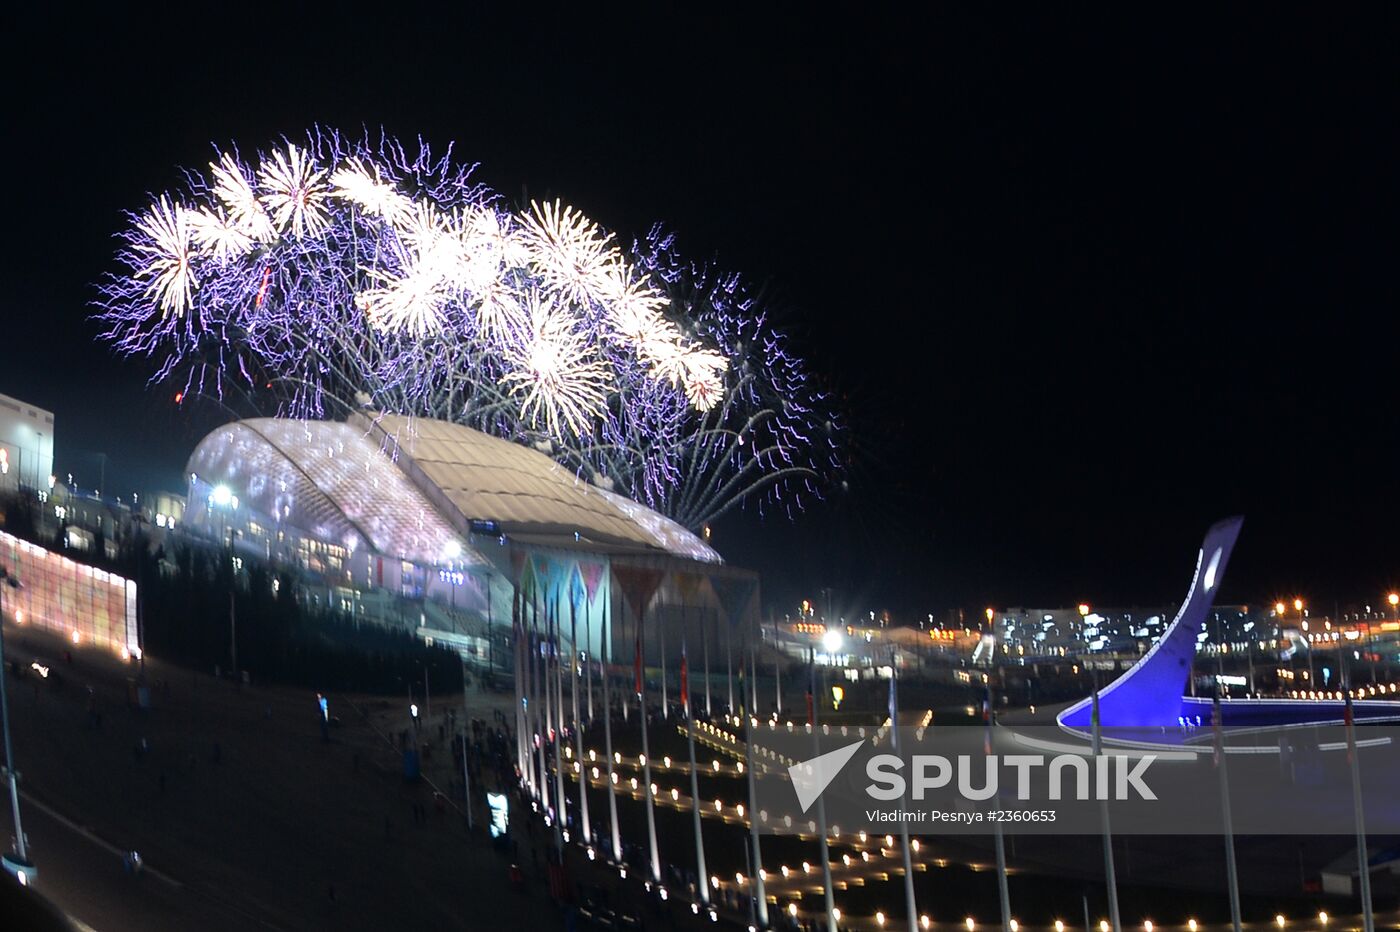 Sochi celebrates XXII Olympic Winter Games opening ceremony